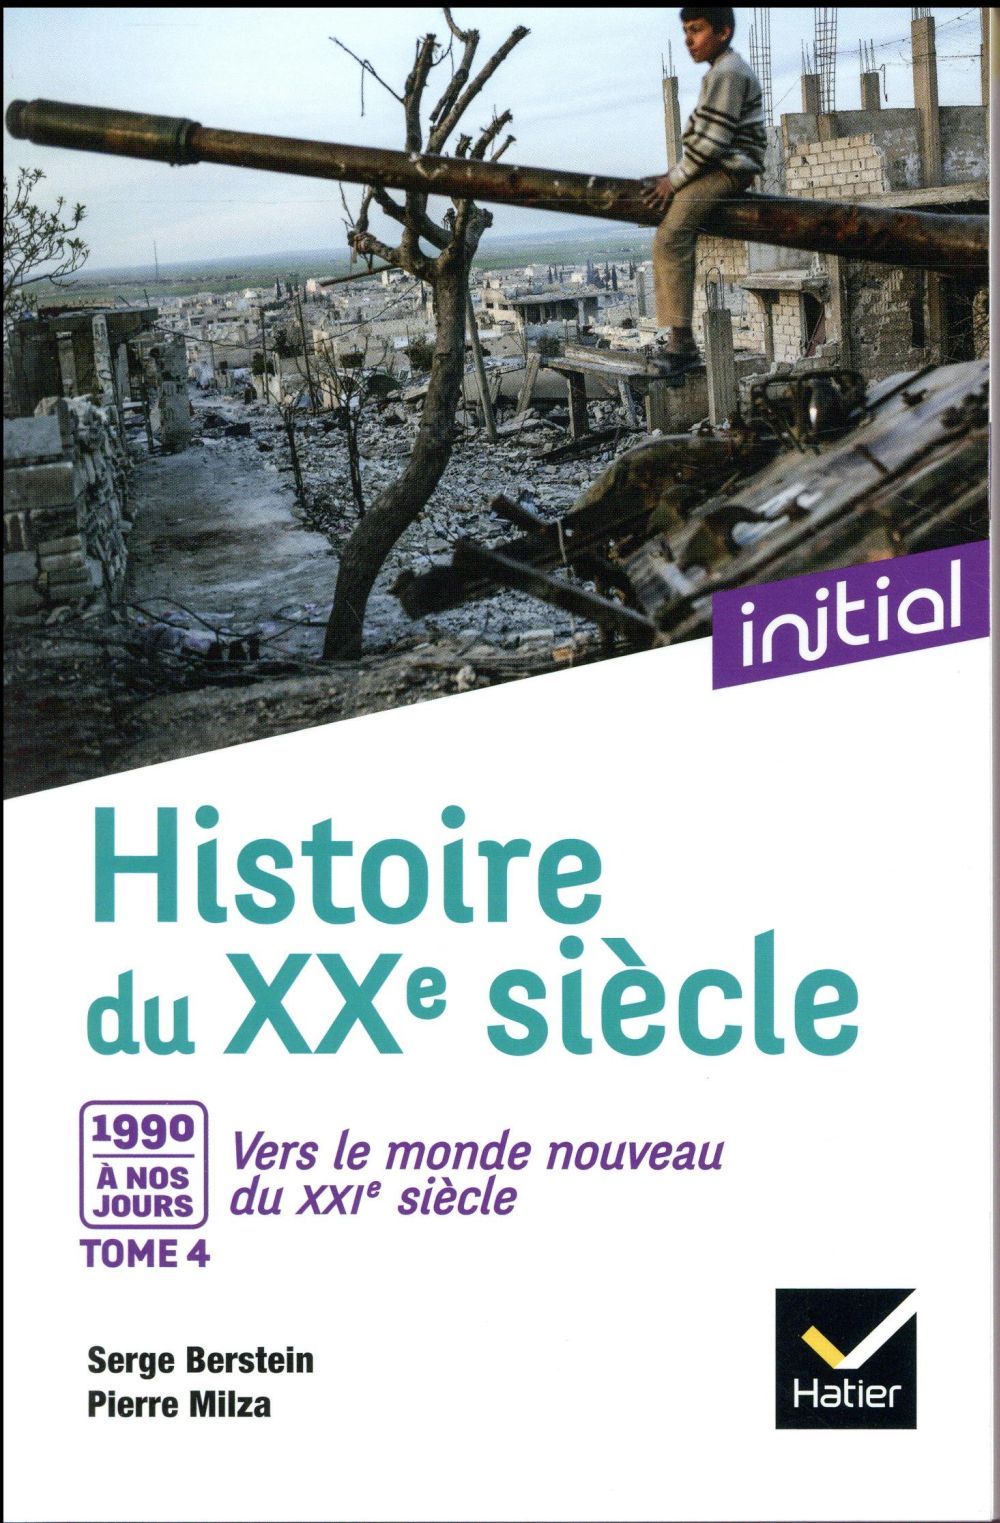 INITIAL - HISTOIRE DU XXE-XXIE SIECLE TOME 4